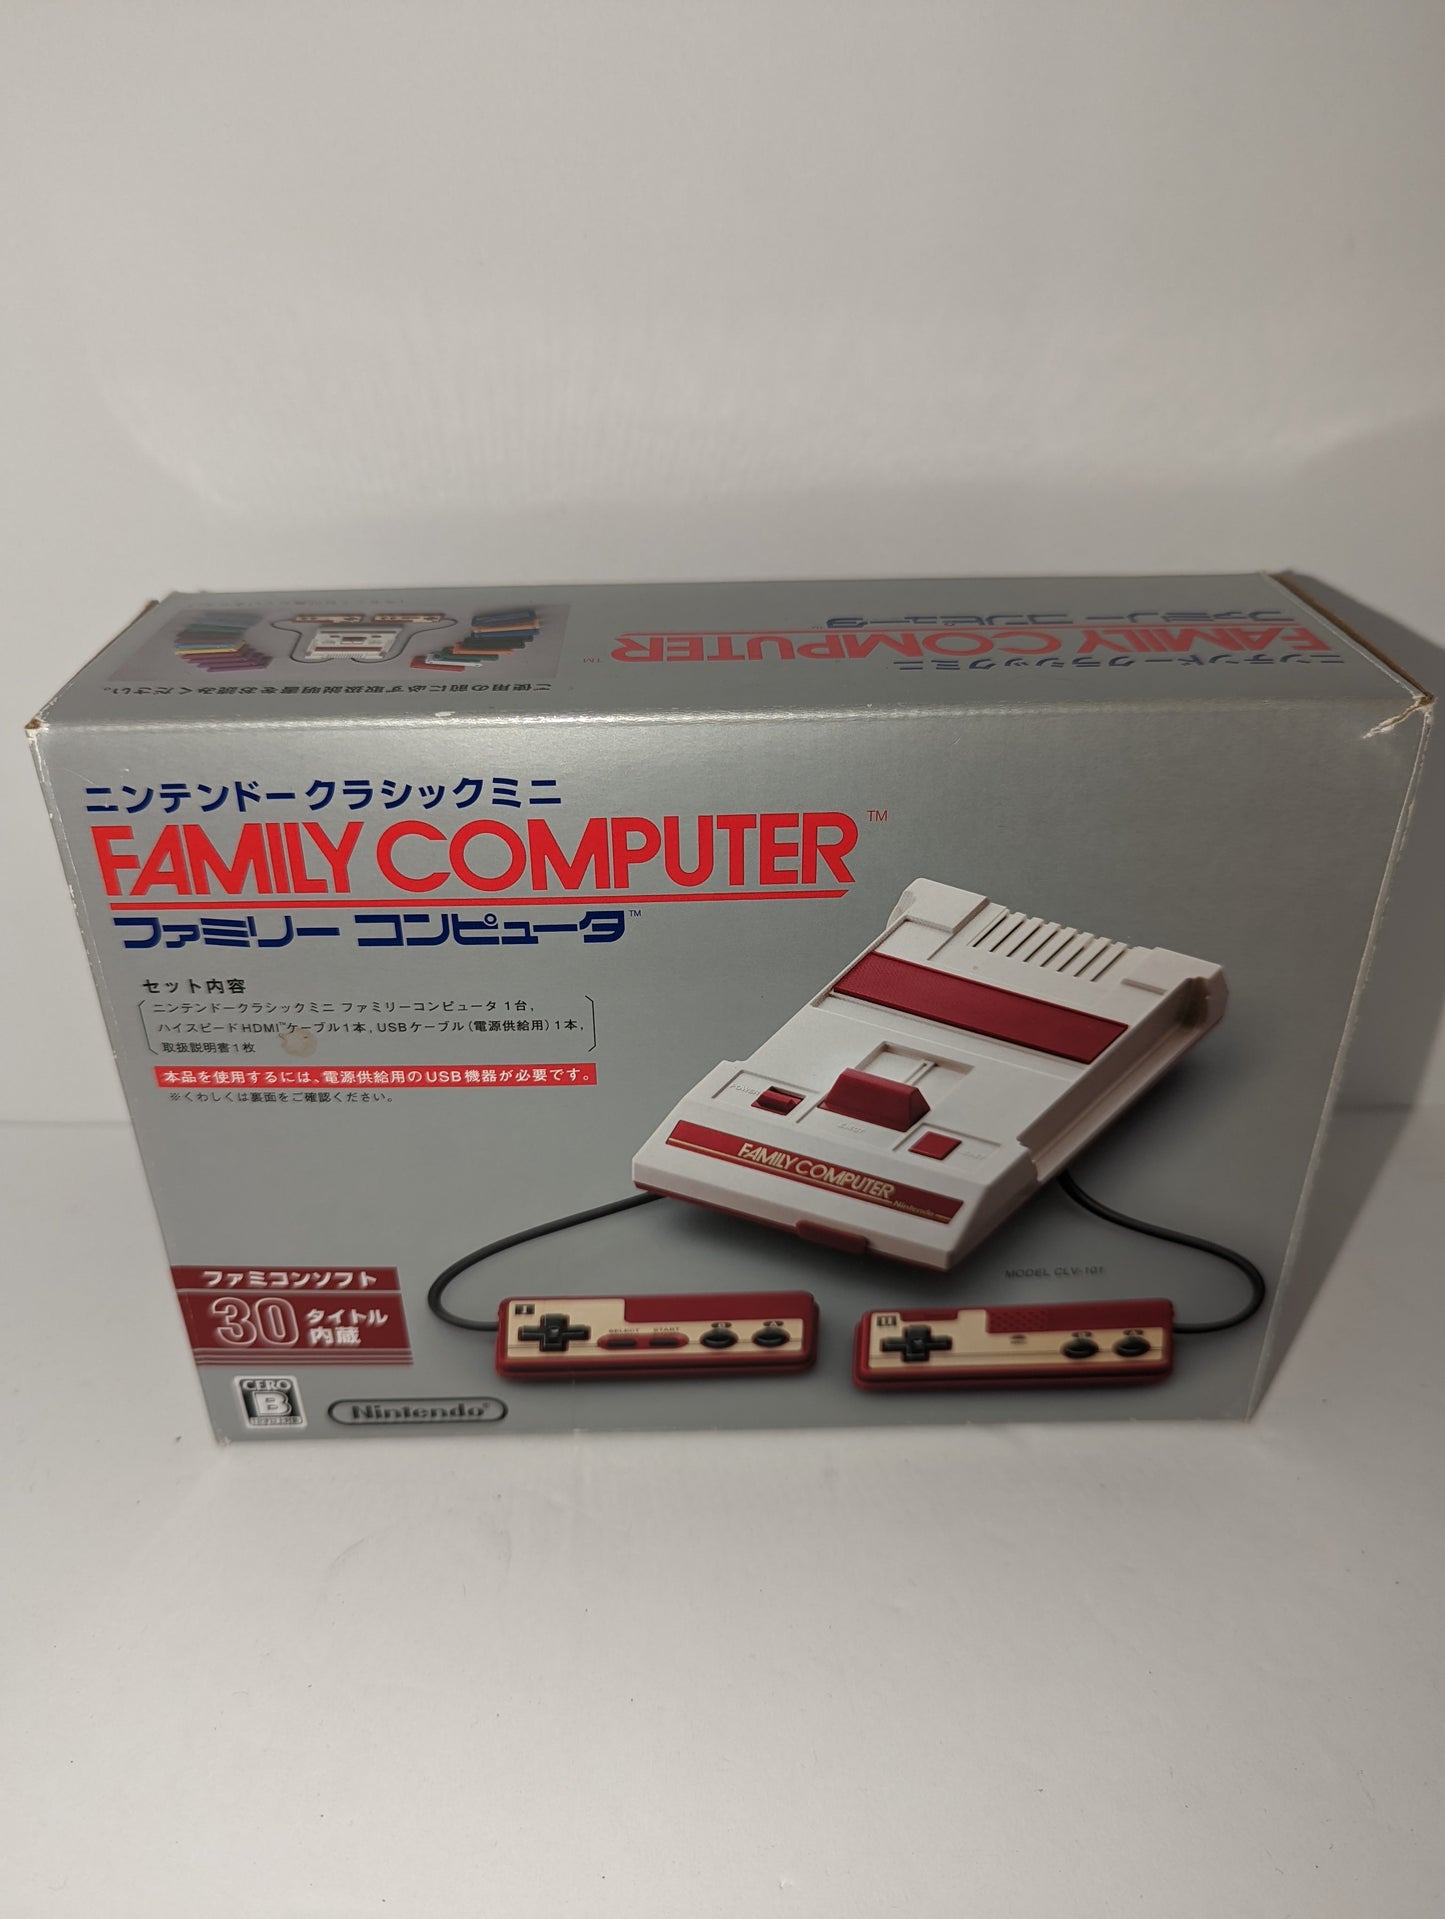 Famicom mini. hdmi